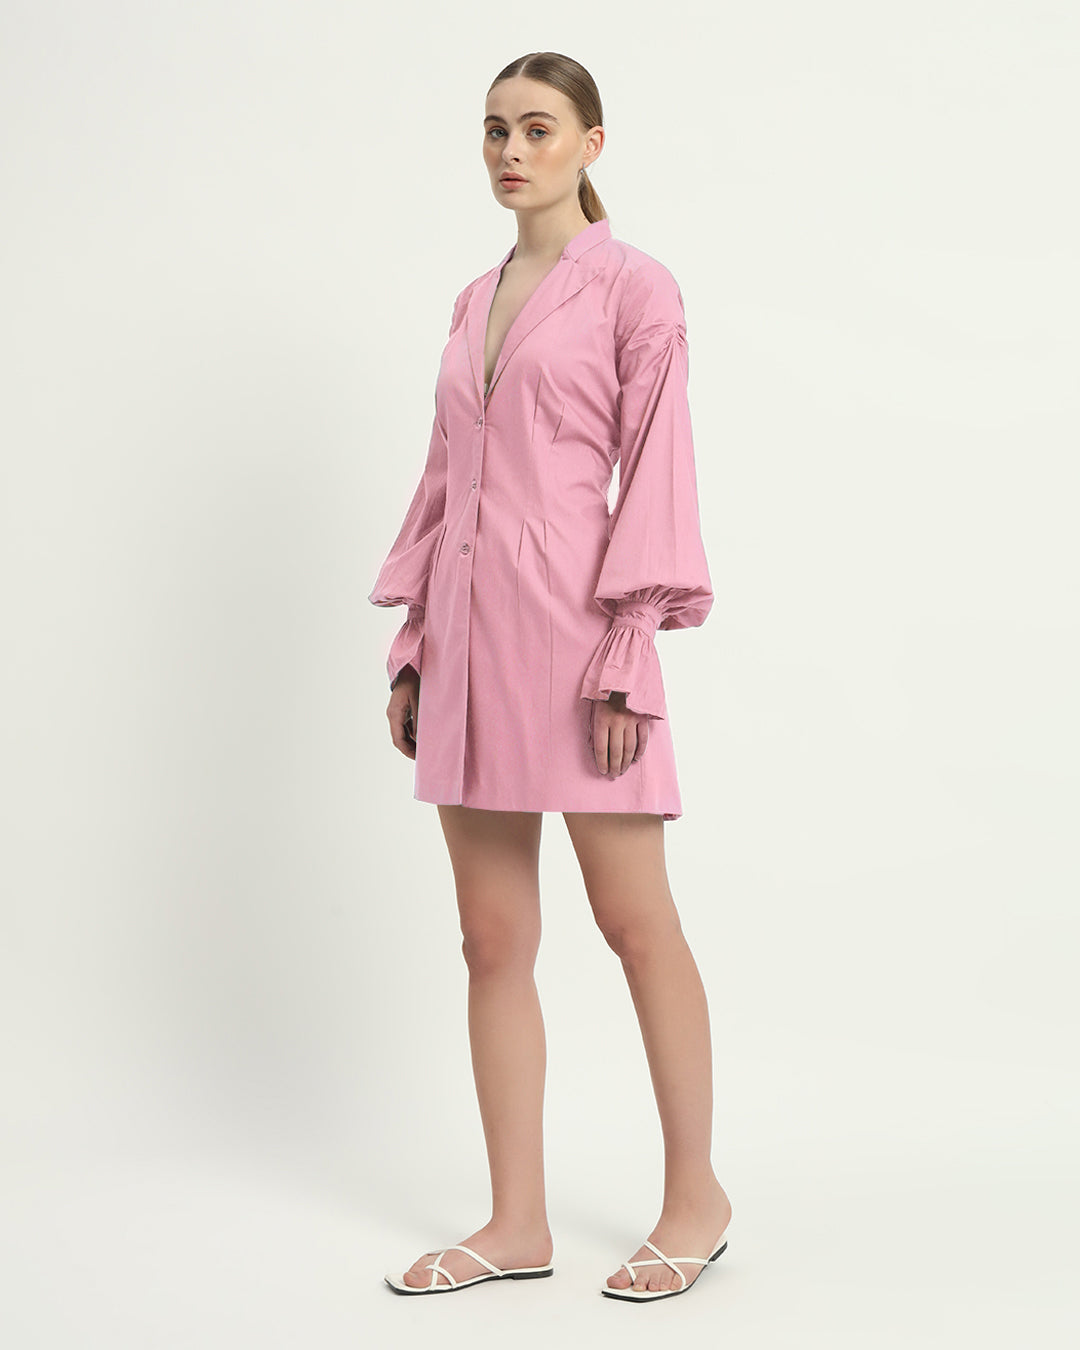 The Fondant Pink Sedona Cotton Dress